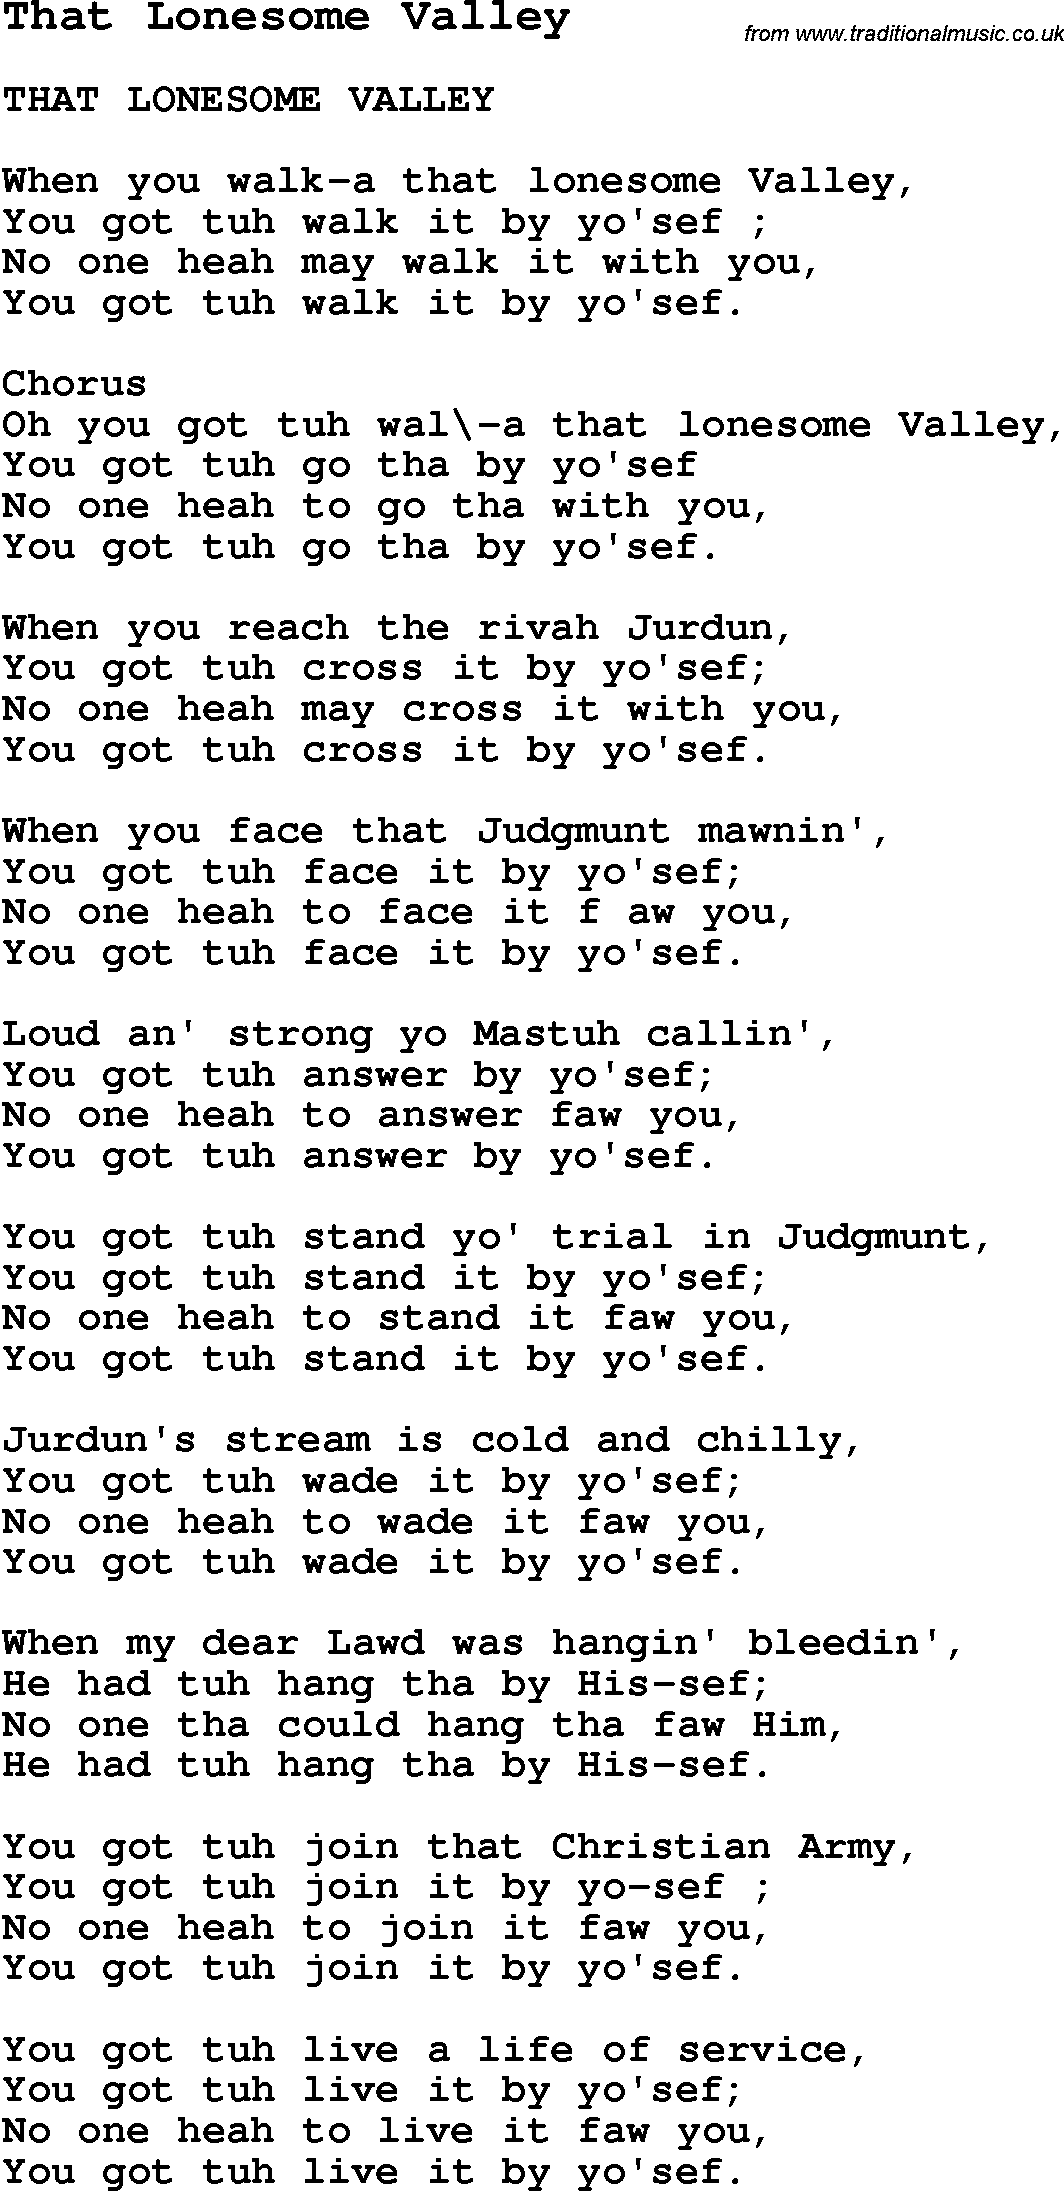 Negro Spiritual Song Lyrics for That Lonesome Valley